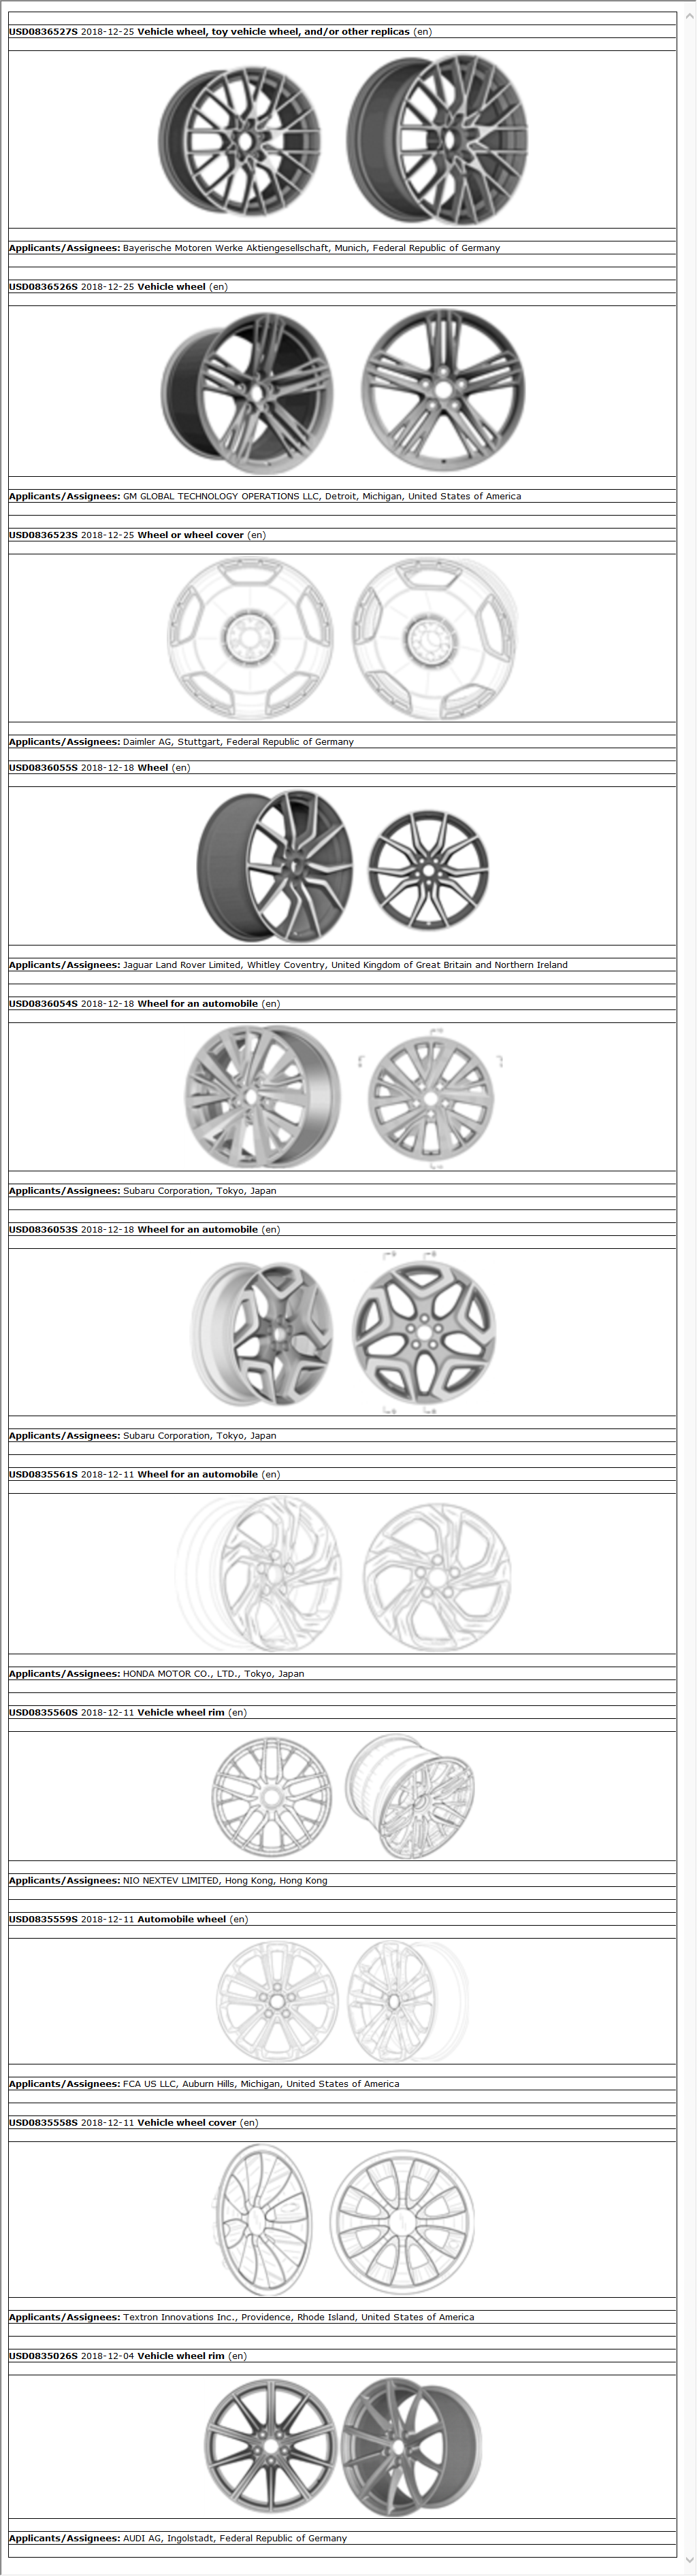 wheel design patent attorney